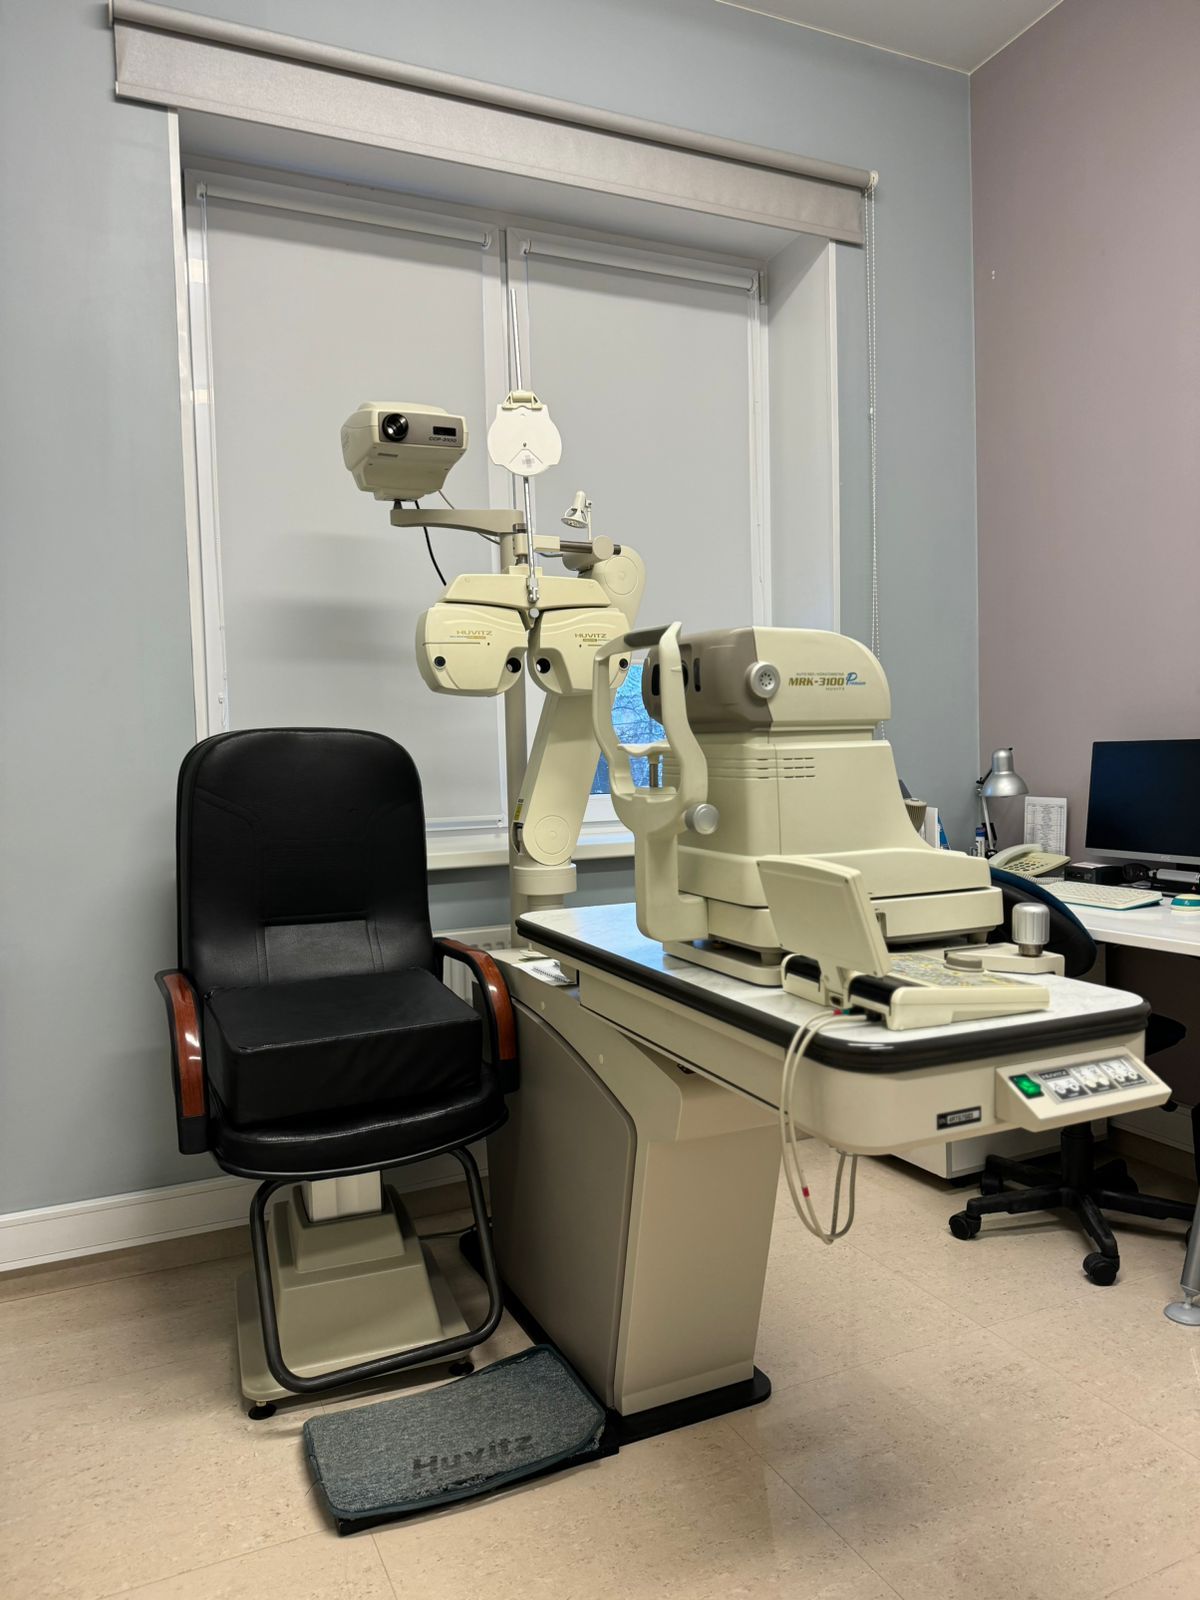 Рабочее место офтальмолога  crt-4000 (Huvitz)  2